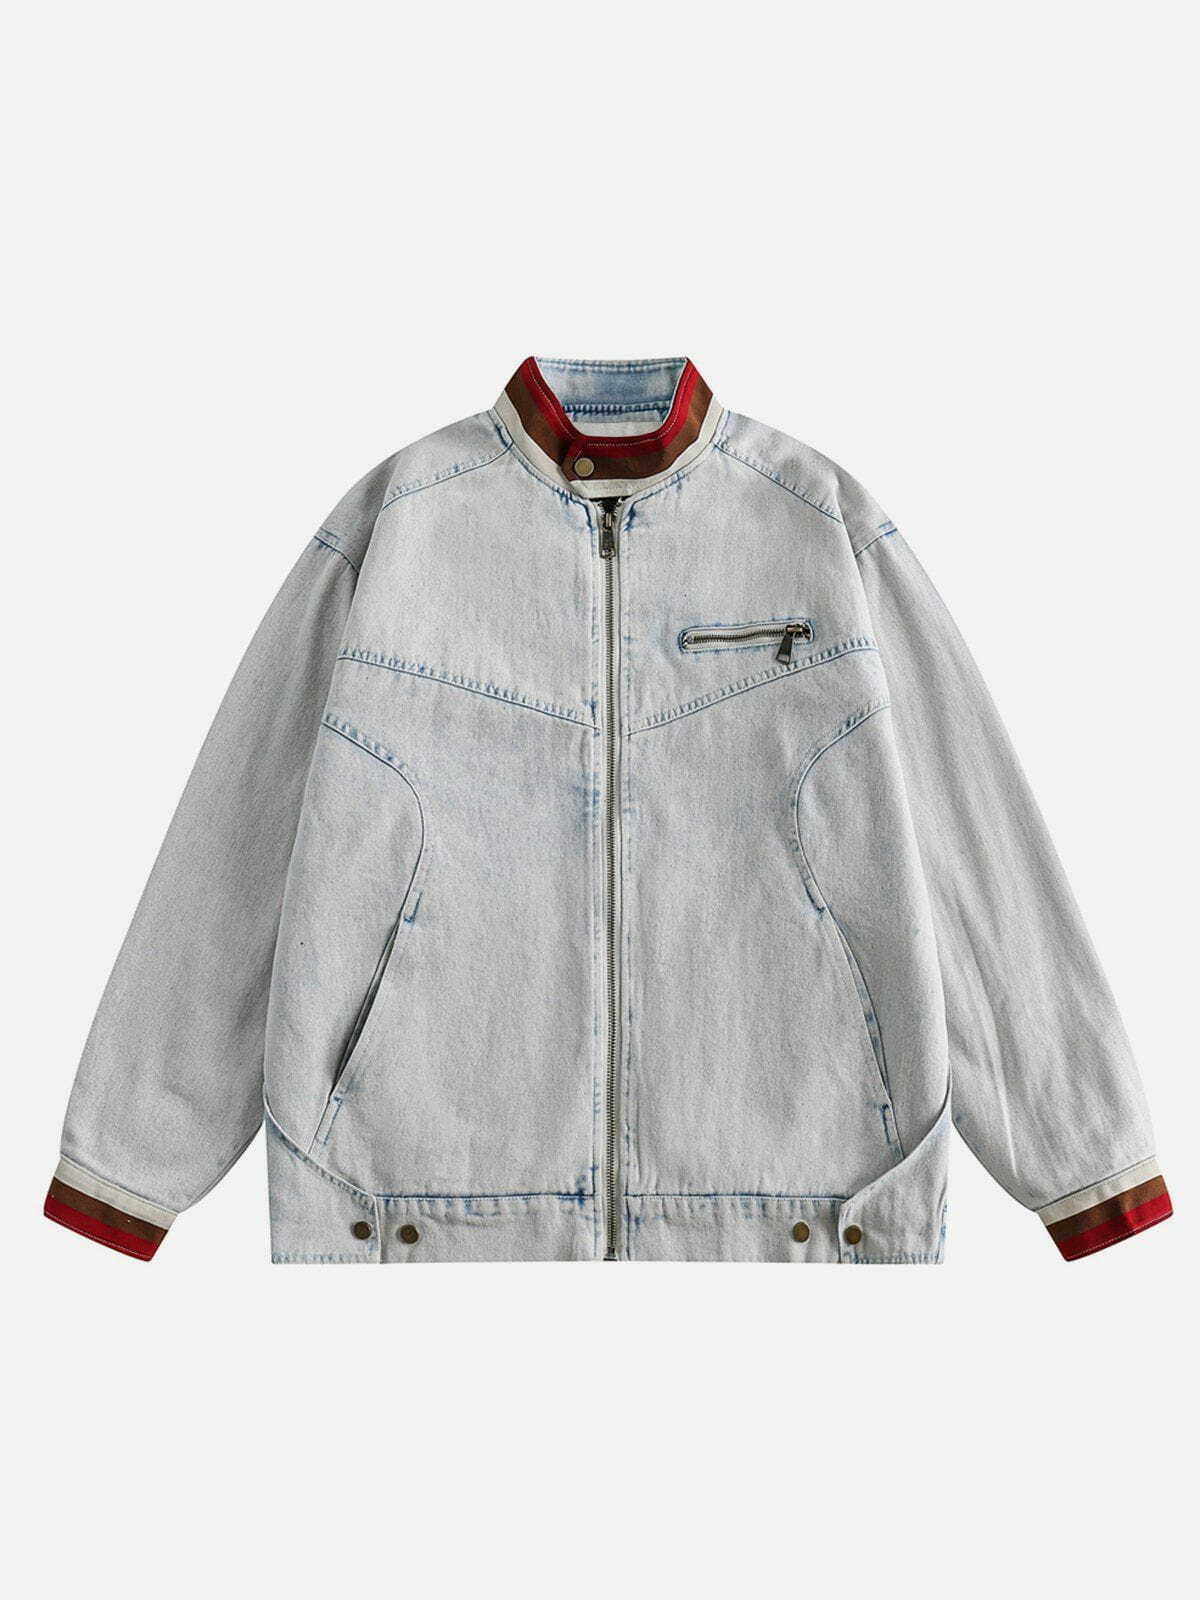 retro denim racing jacket edgy & vibrant streetwear 6791